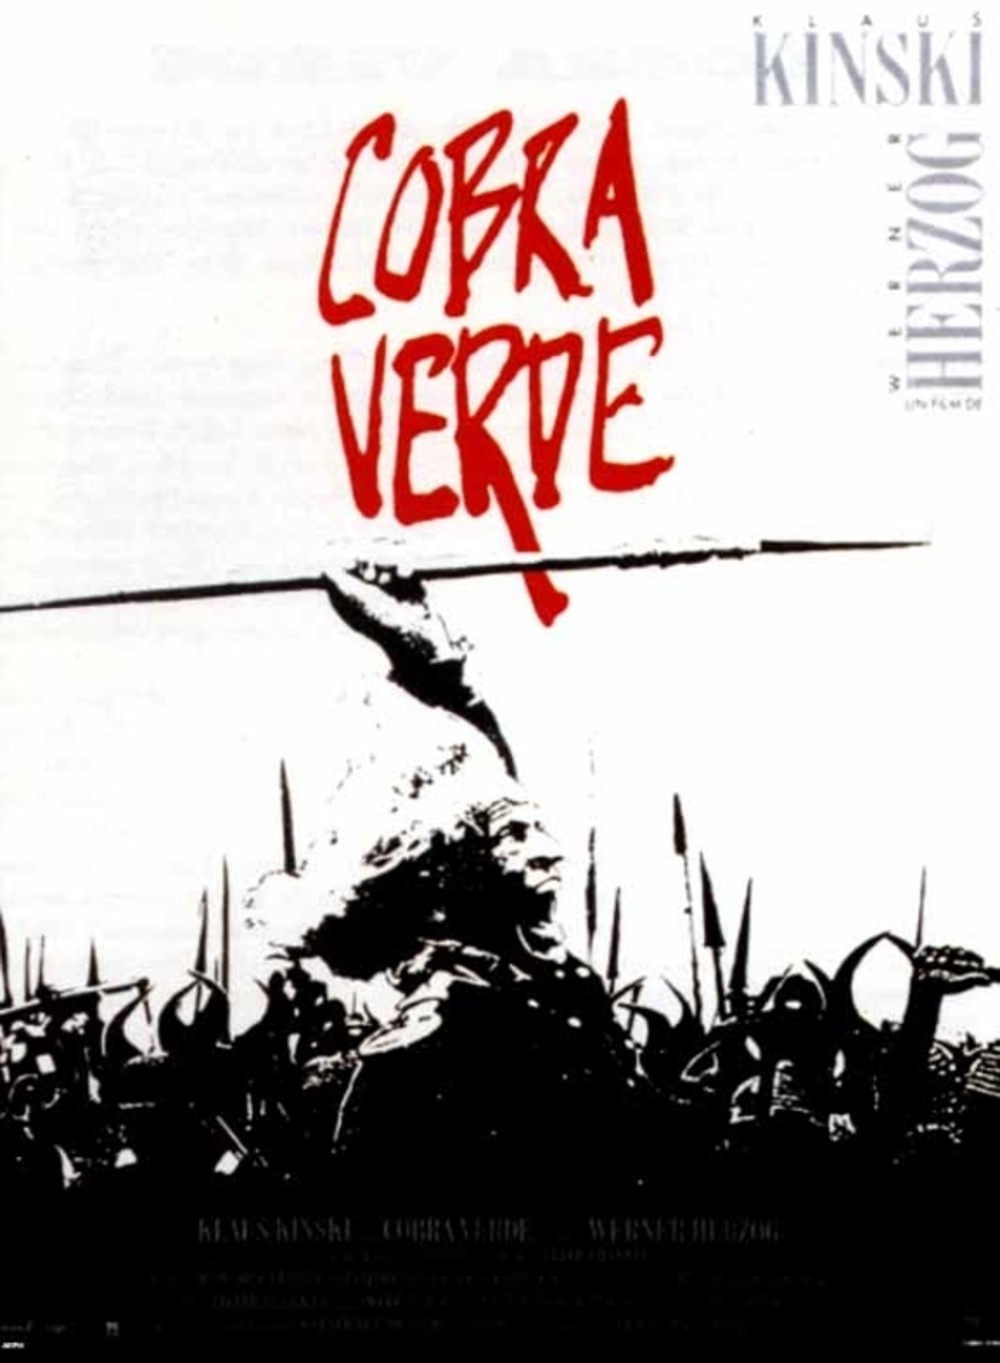 affiche du film Cobra Verde